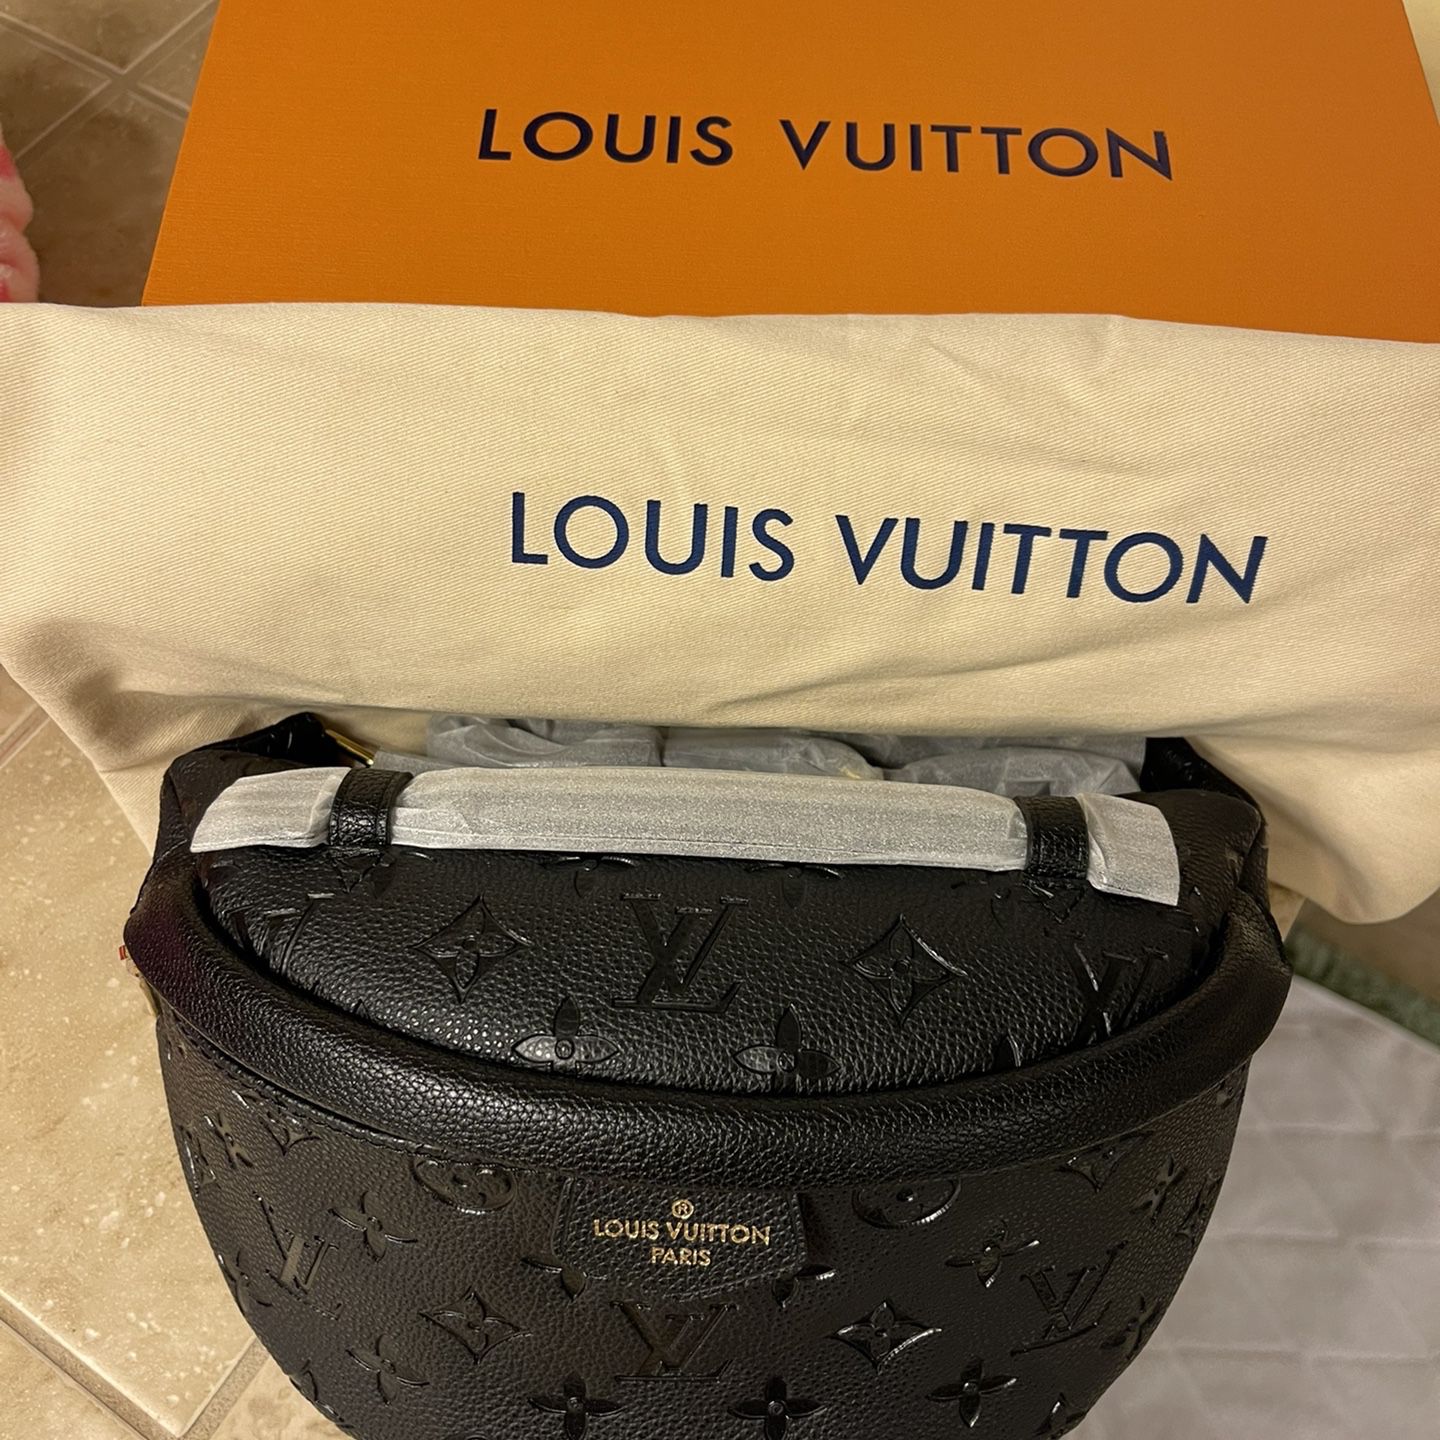 Louis Vuitton Bumbag N43644 for Sale in La Puente, CA - OfferUp